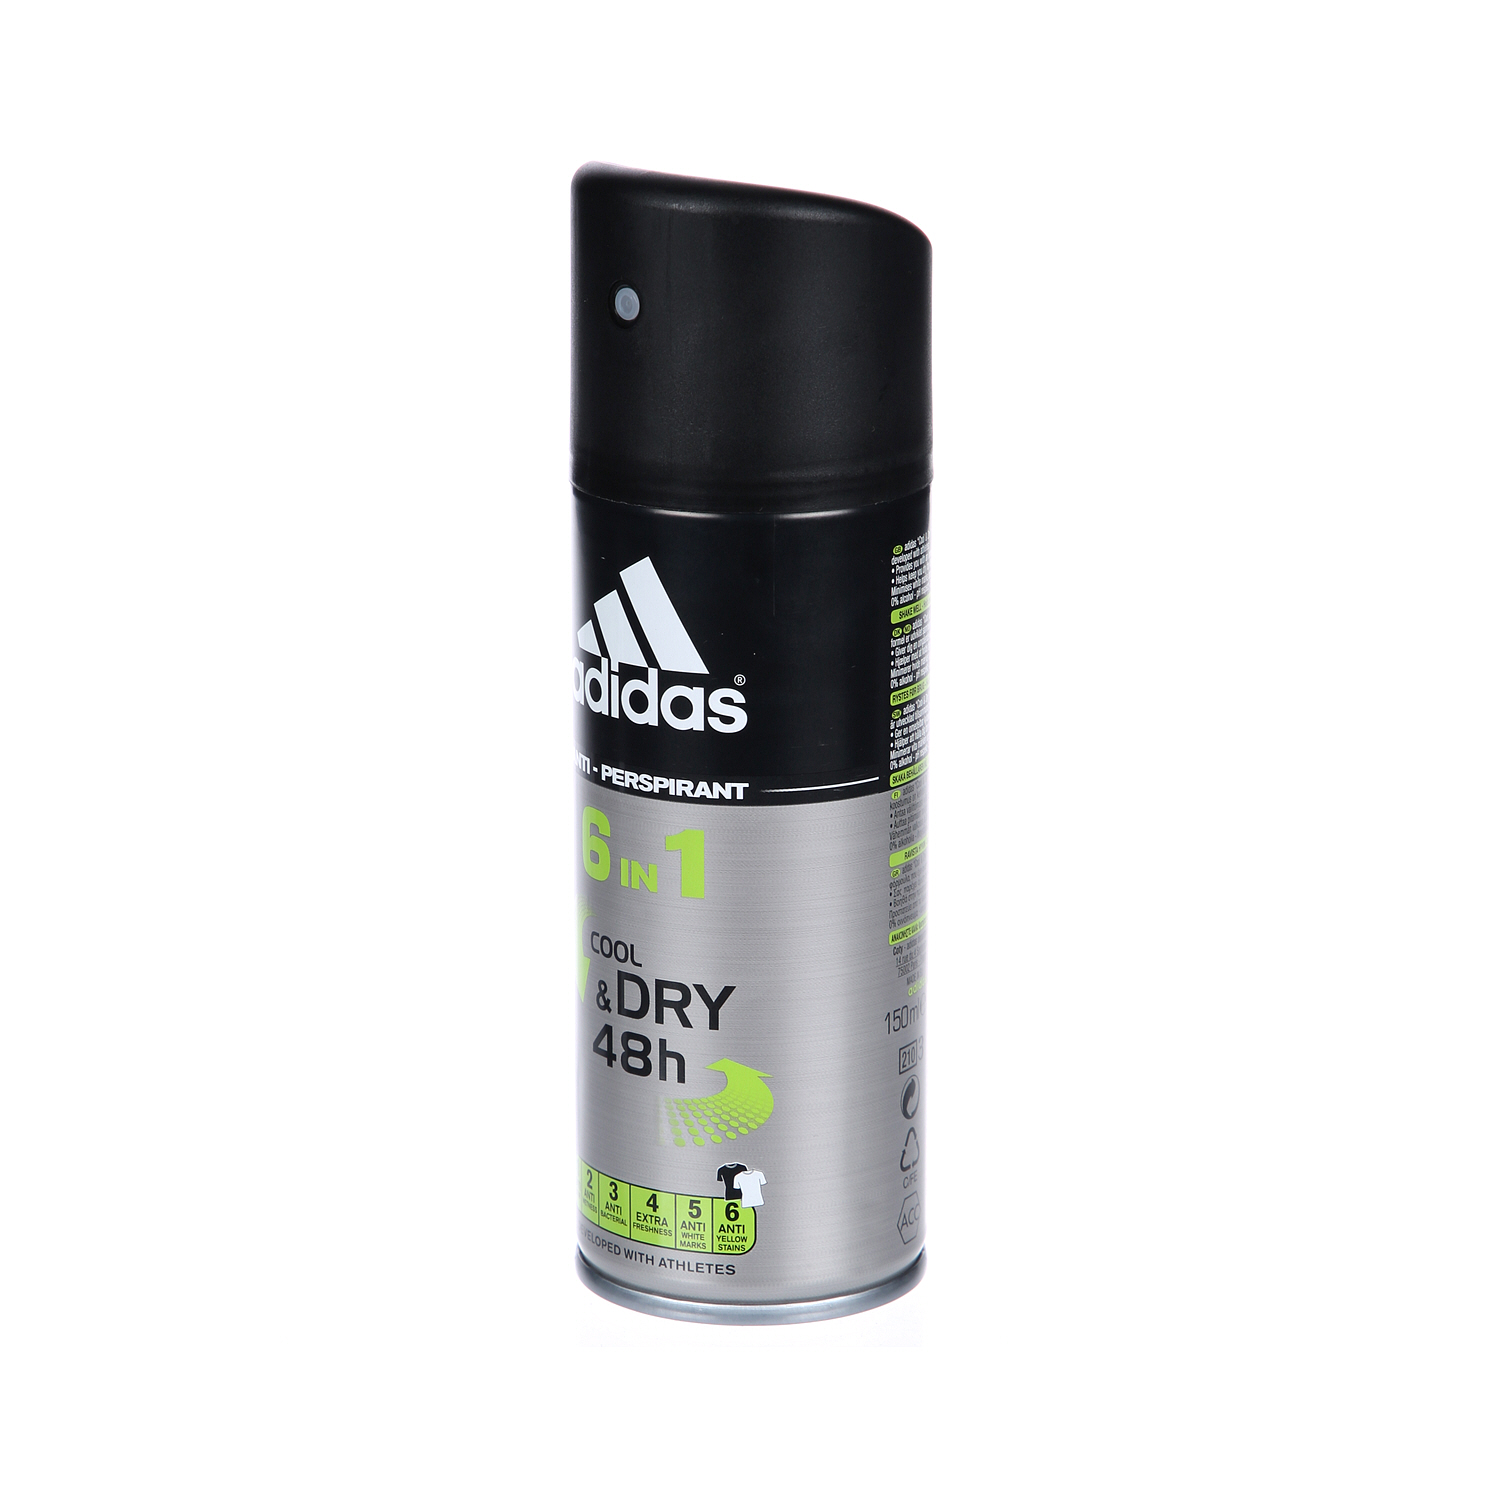 Adidas 6 In 1 Anti-Perspirant Spray For Him 150 ml